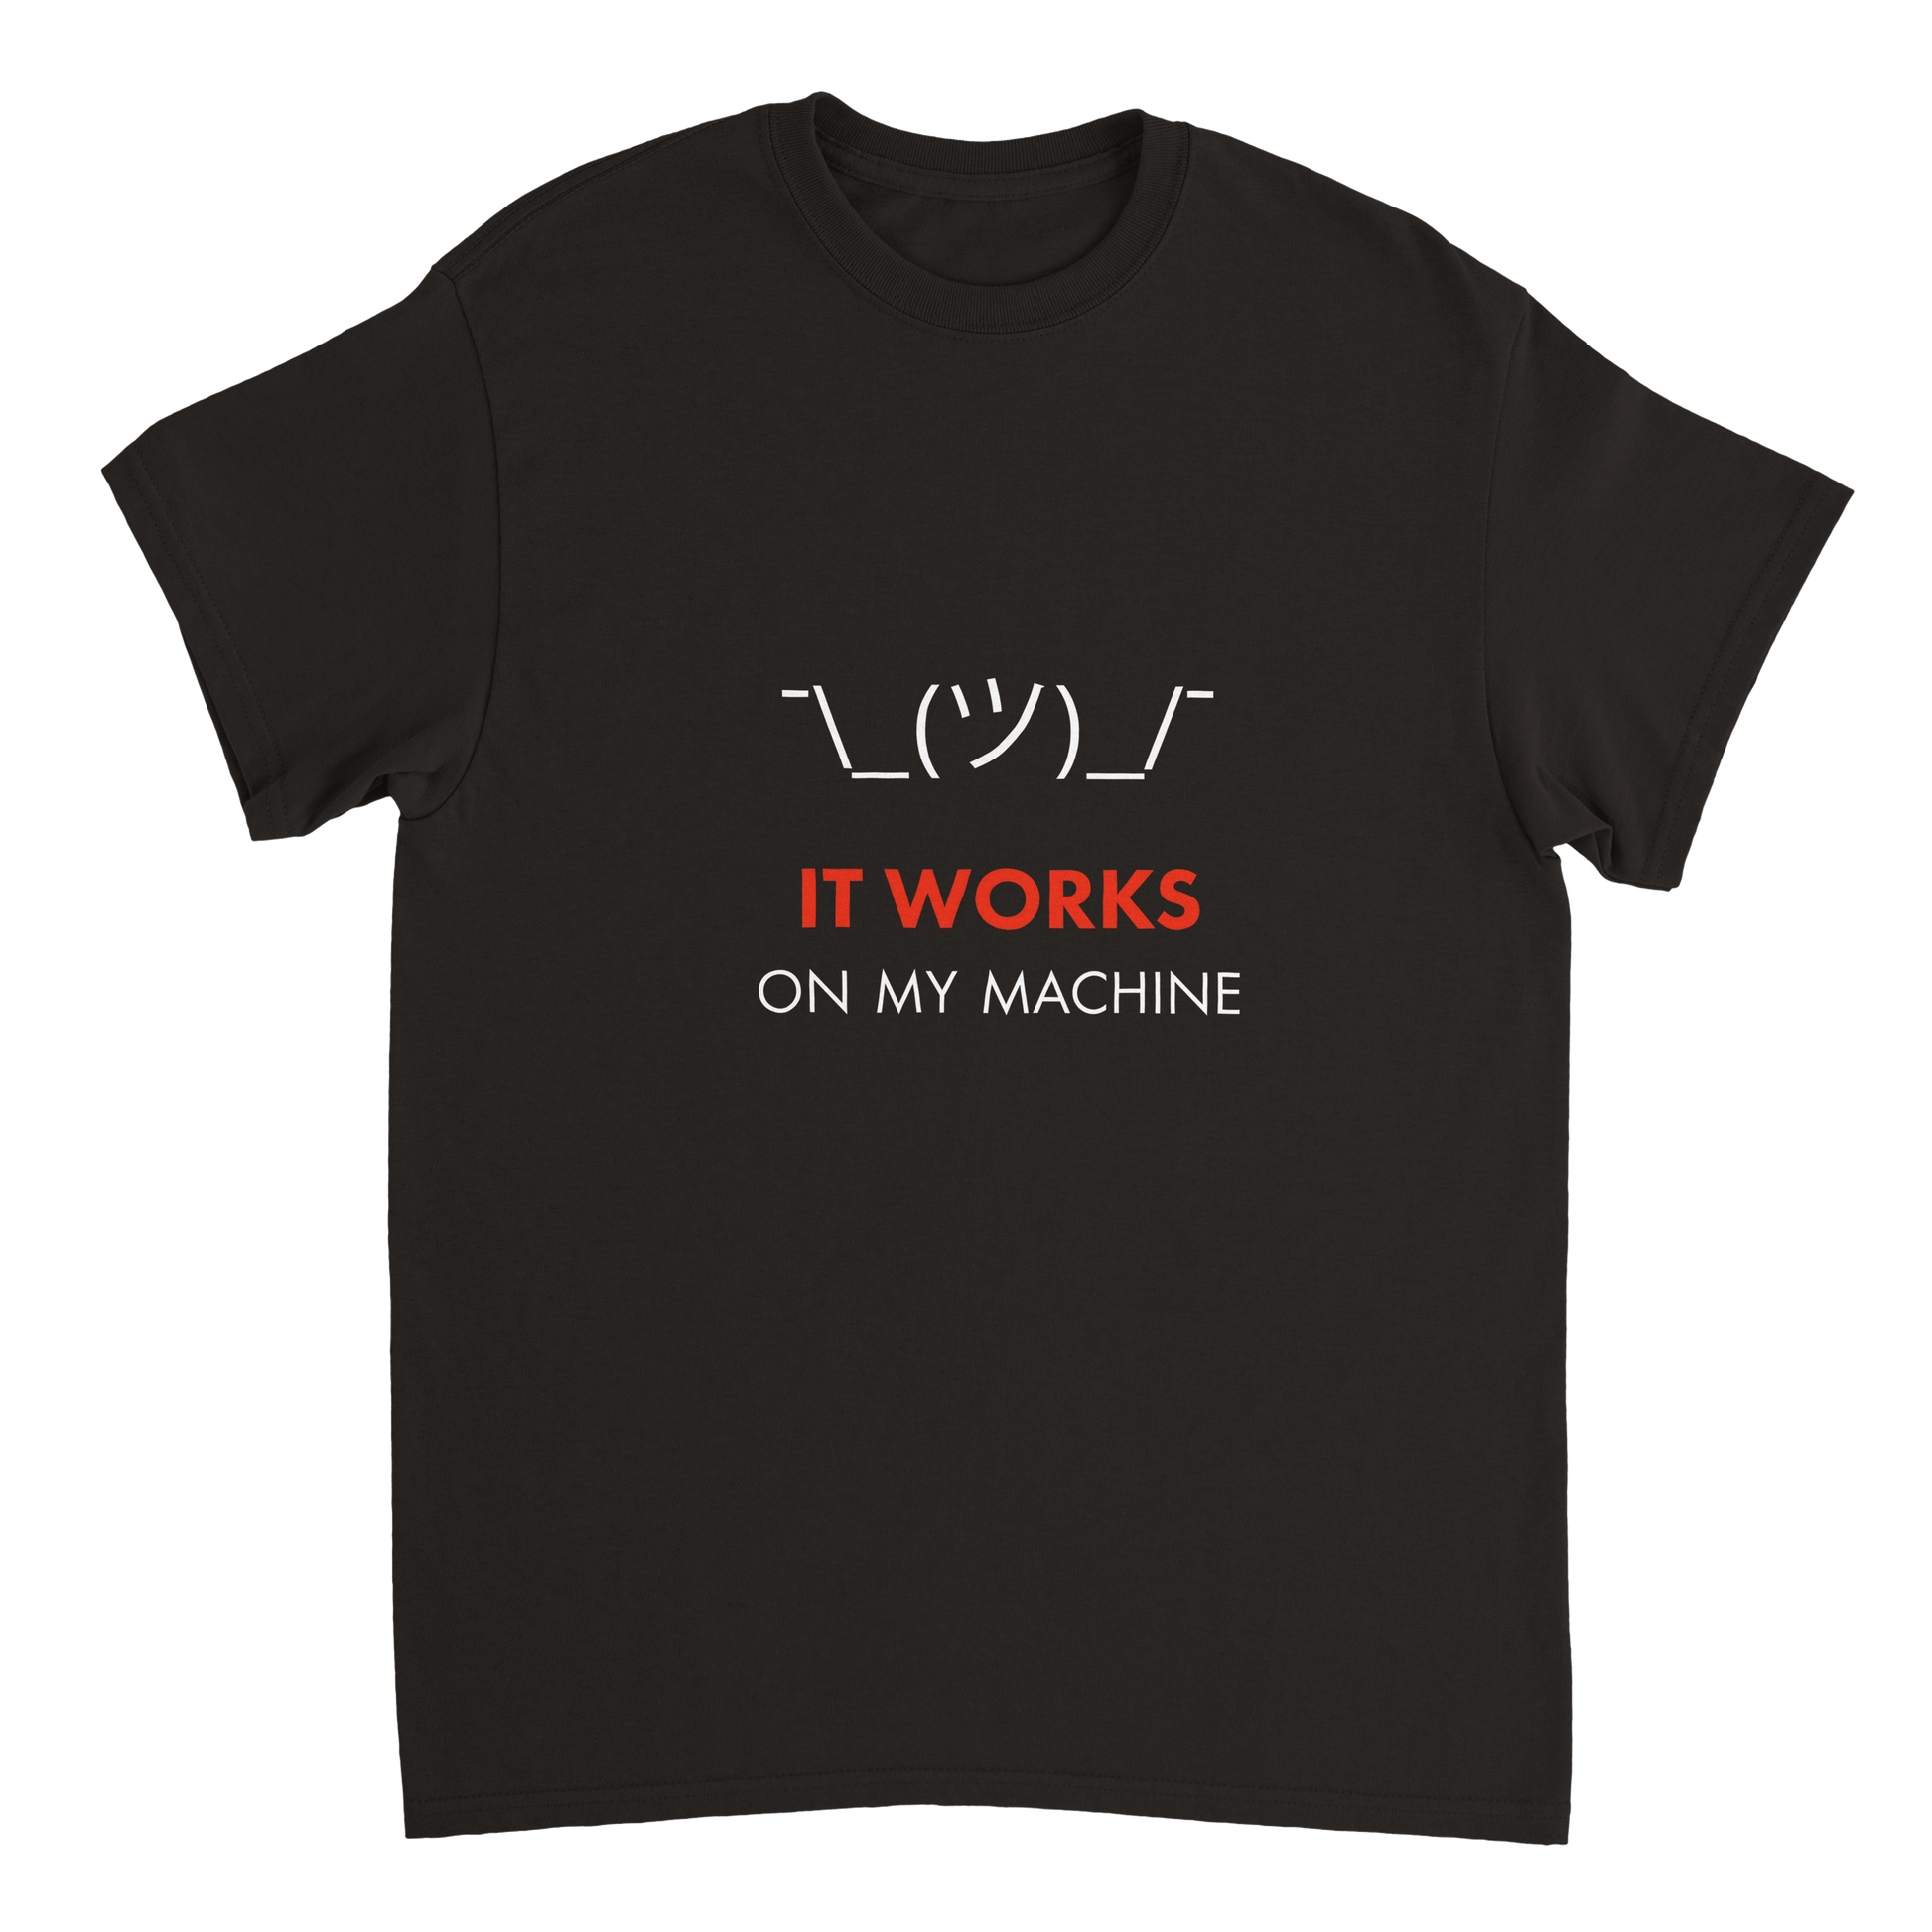 Works on my machine - Dryblend t-shirt - Ladybug Designs